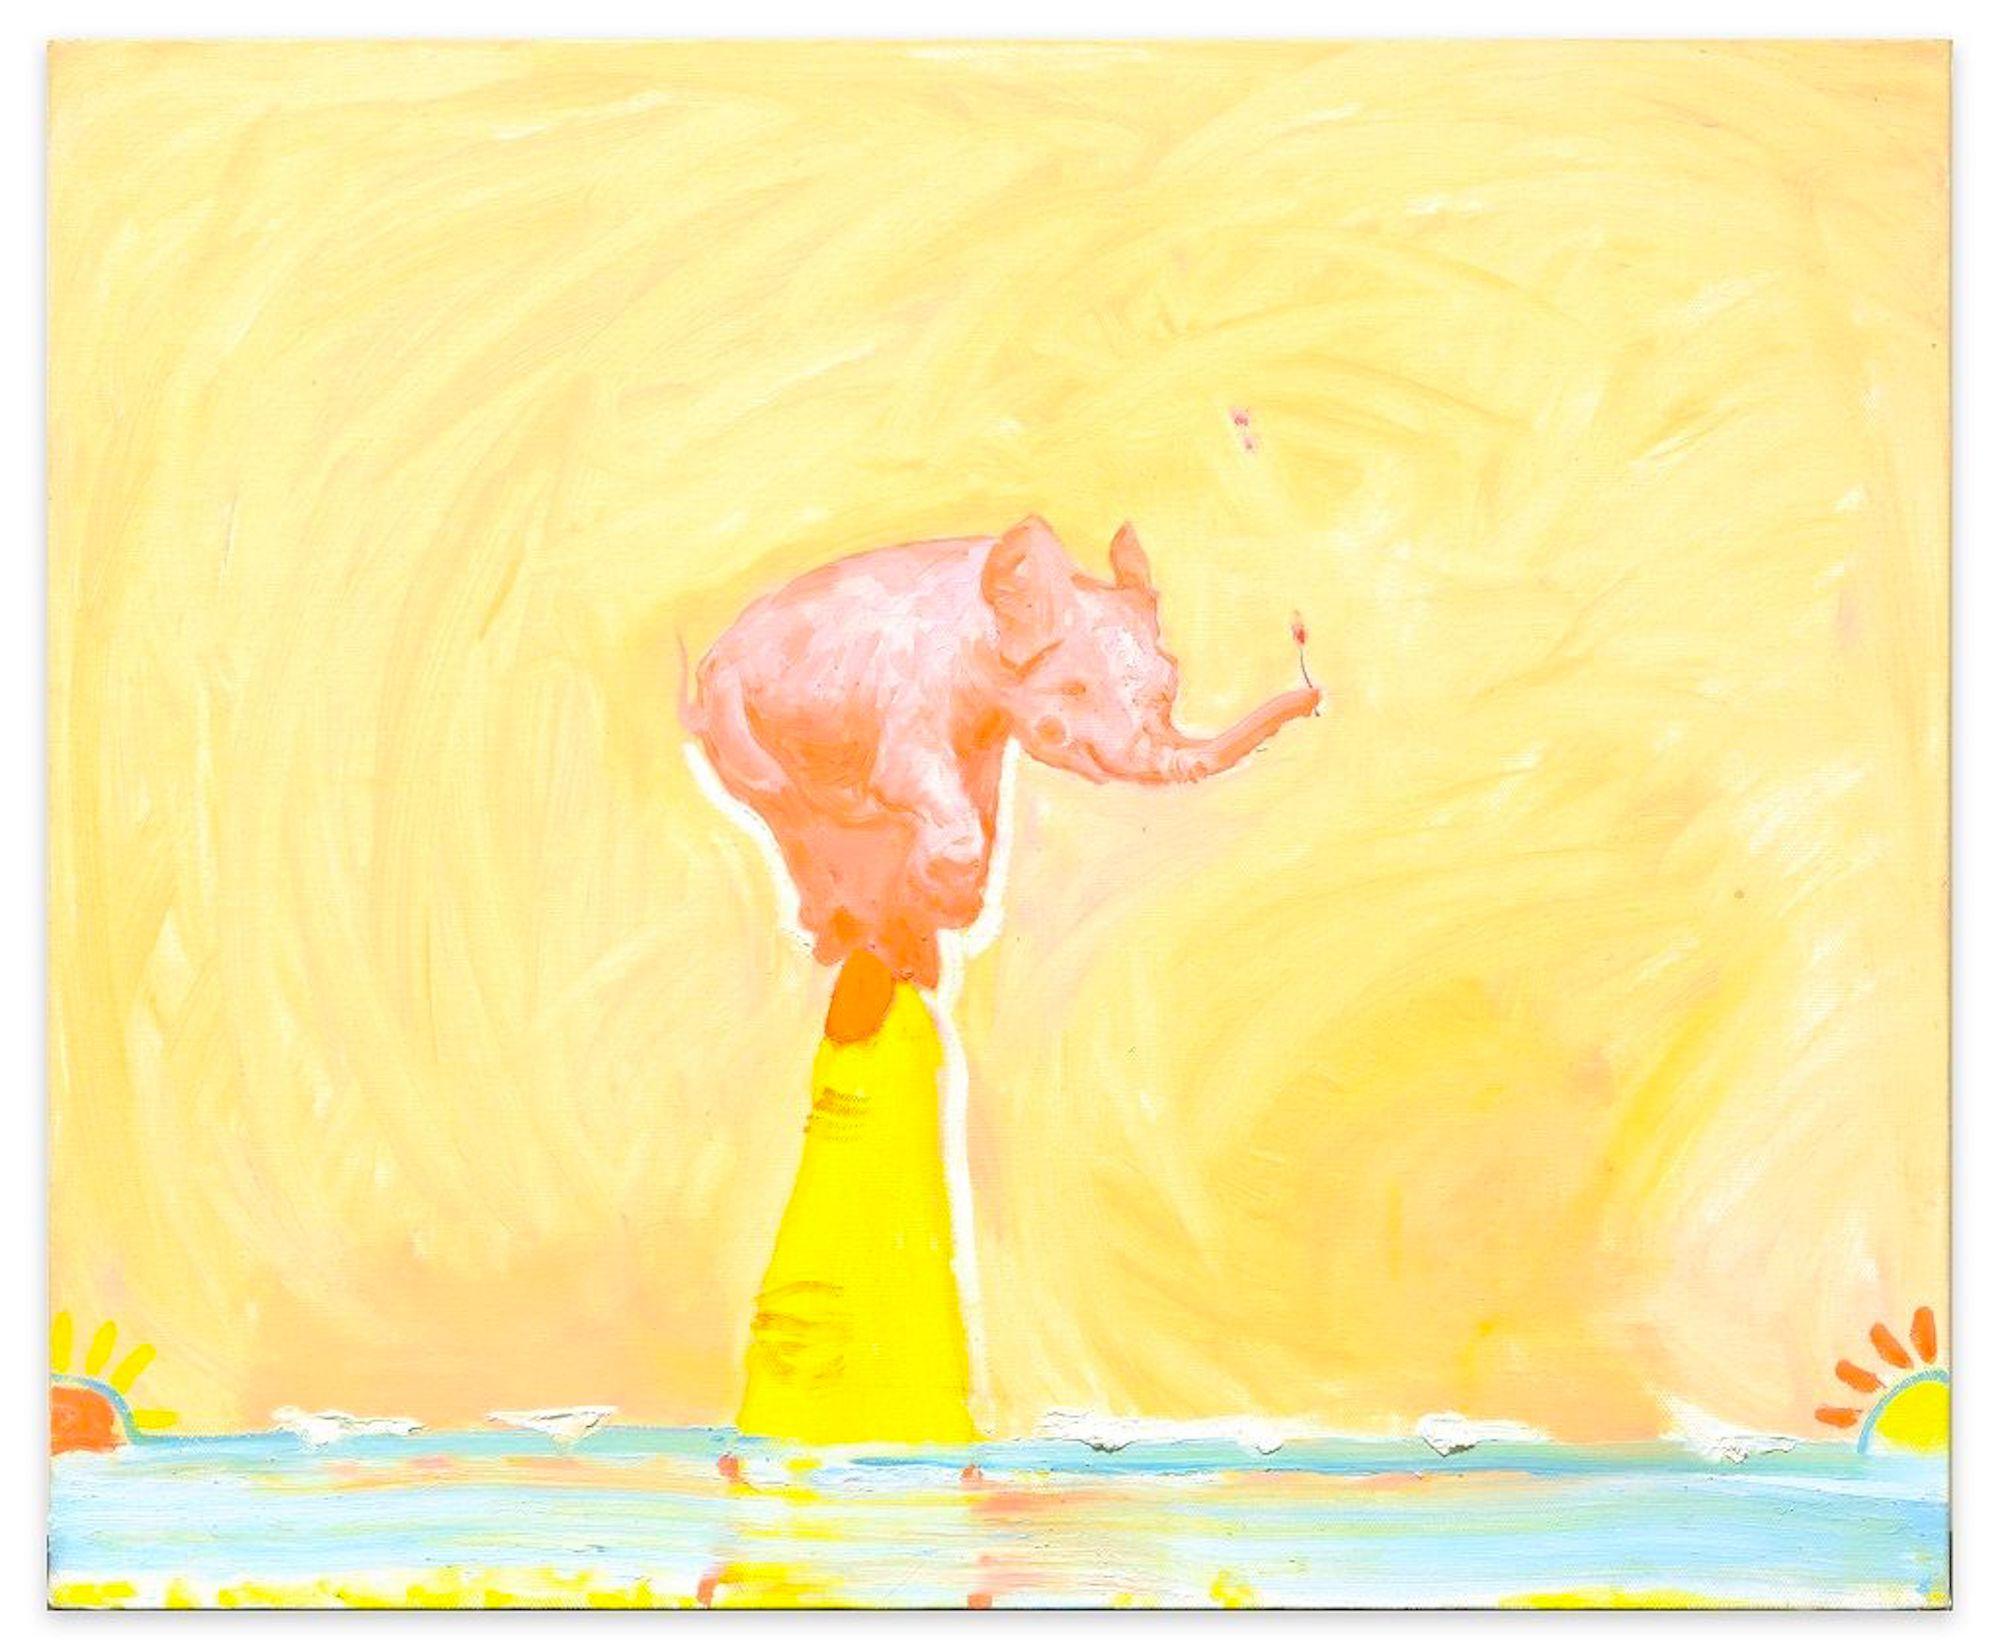 Pink Elephant - Oil on Canvas by Anastasia Kurakina - 2019